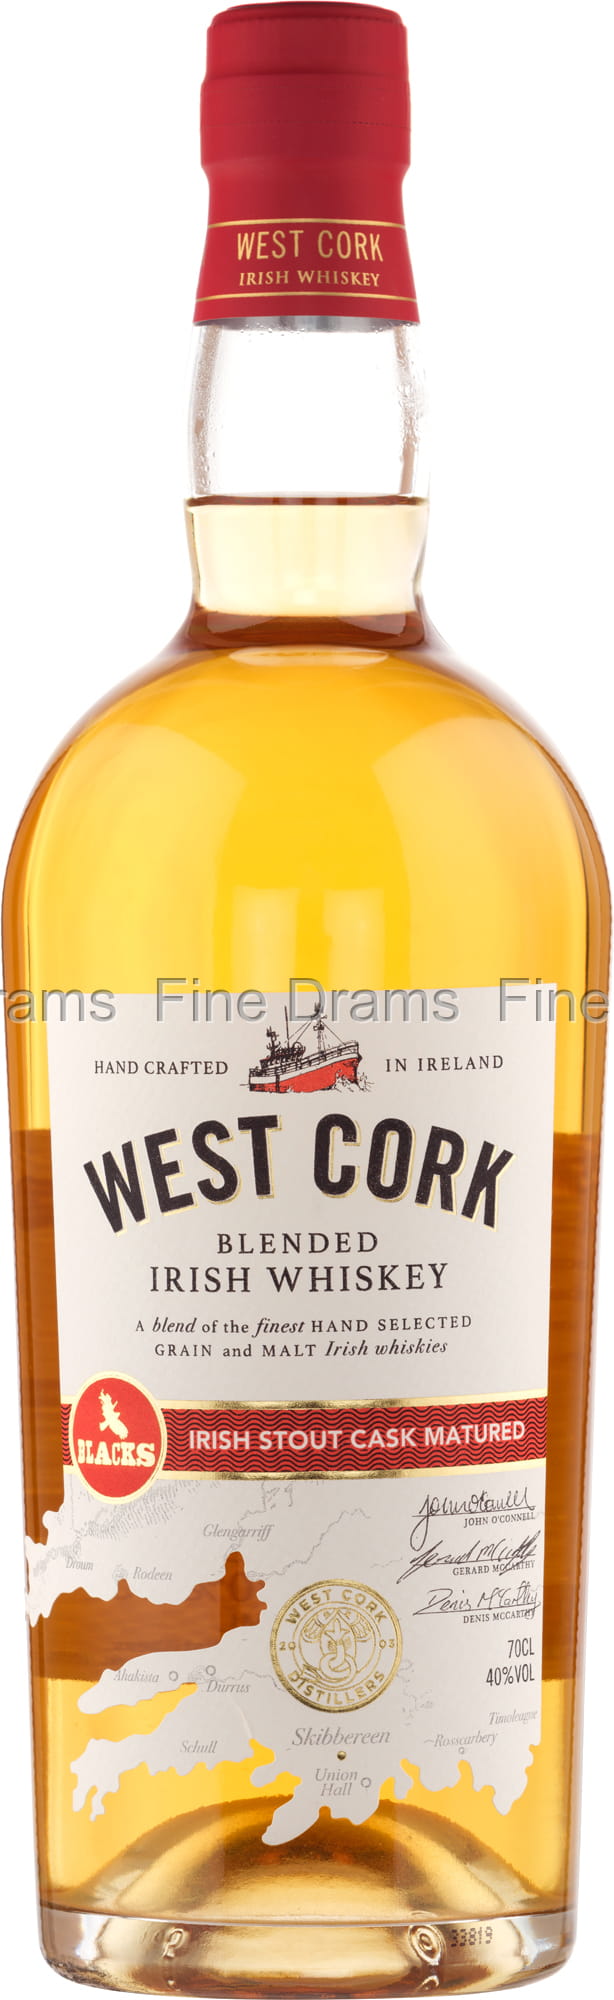 West Cork Irish Stout Cask Matured Whisky